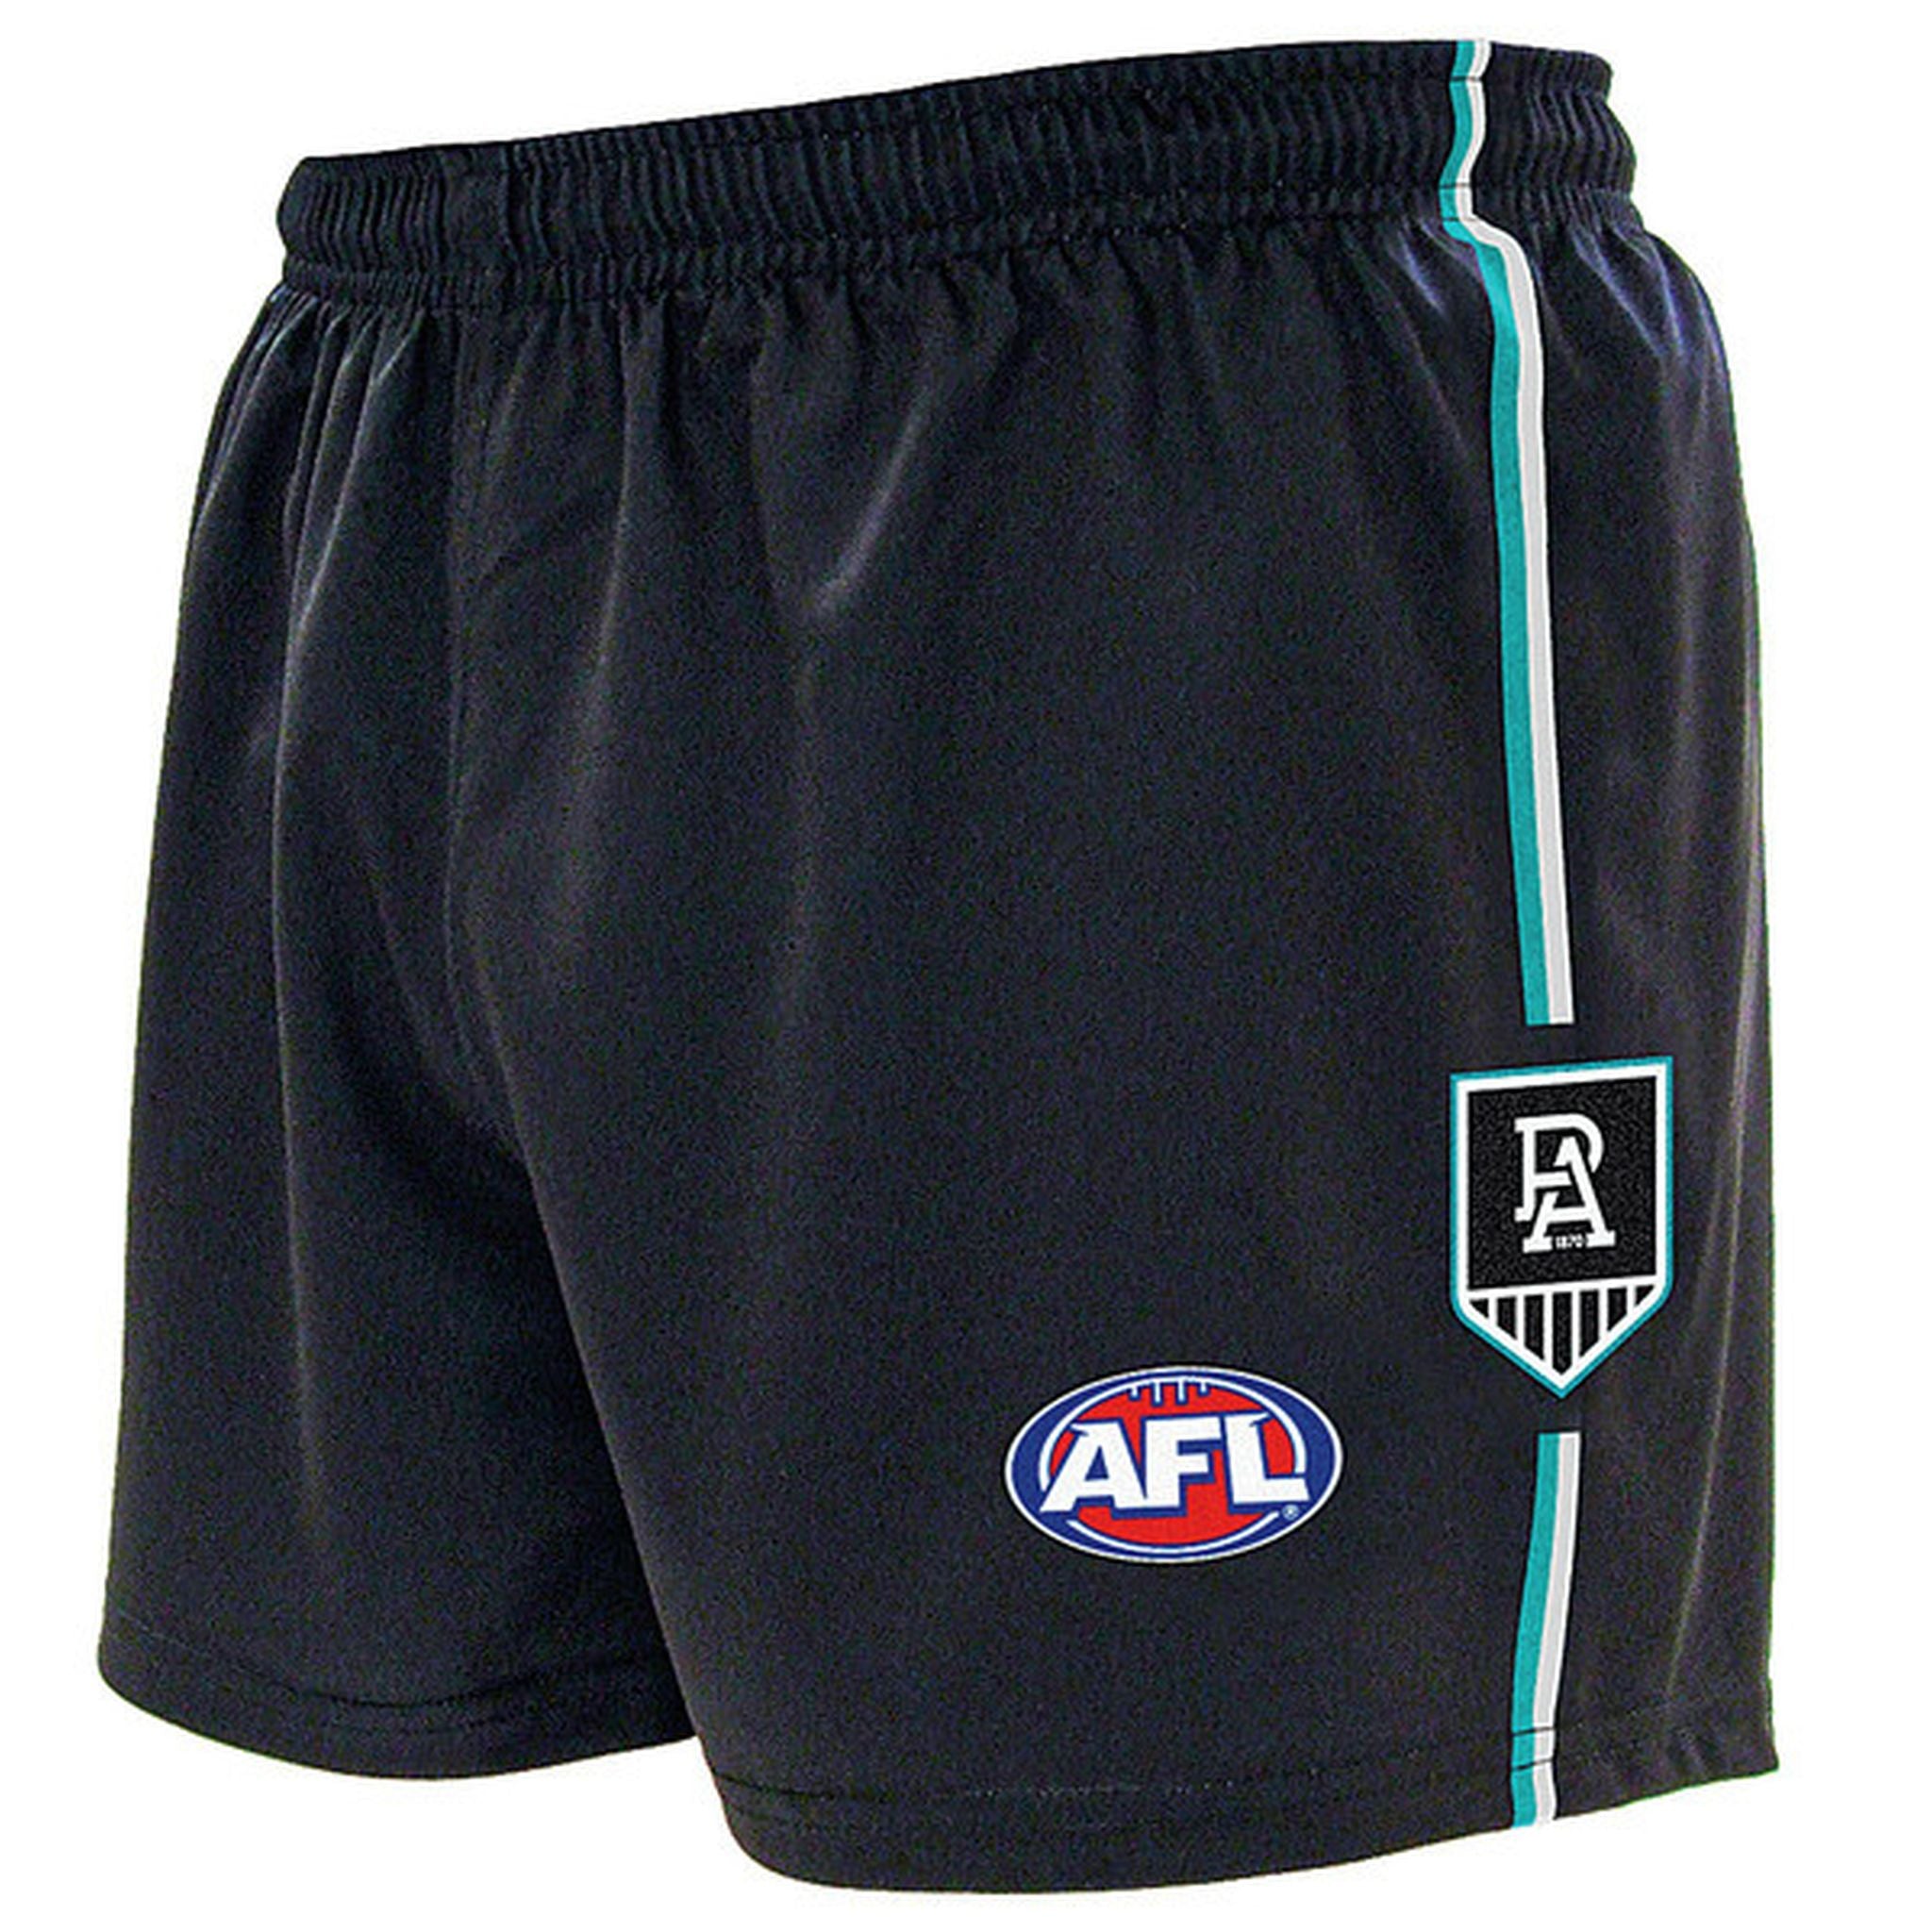 Burley Port Power AFL Replica Kids Shorts